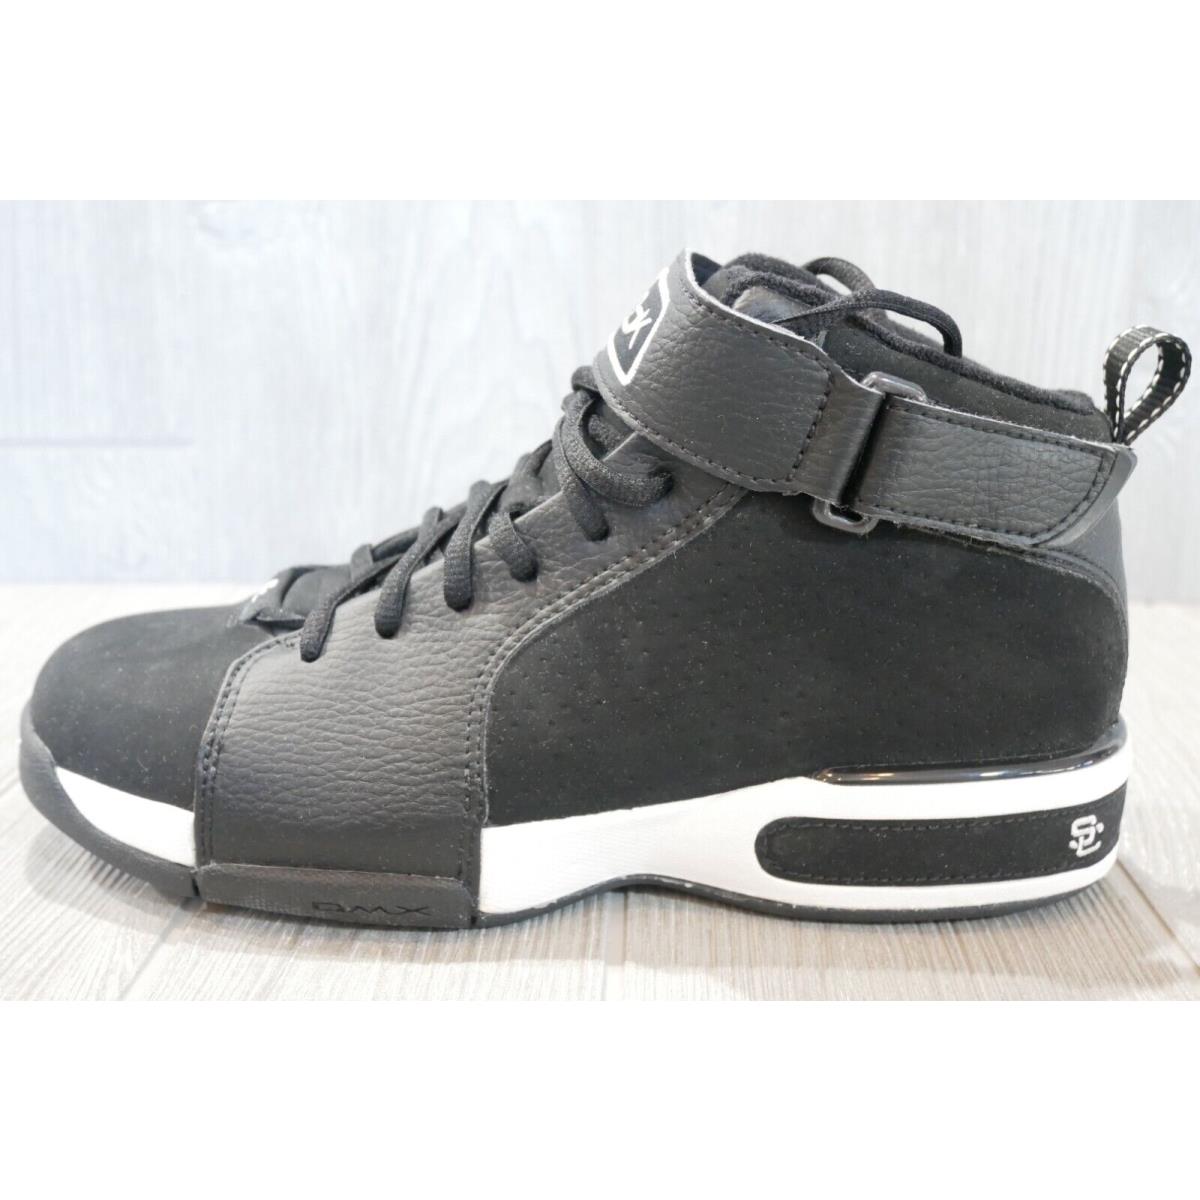 Reebok | Shoes | Reebok Vintage Y2k S Carter Jayz Size 5 Black Leather  Sneakers Limited Ed | Poshmark